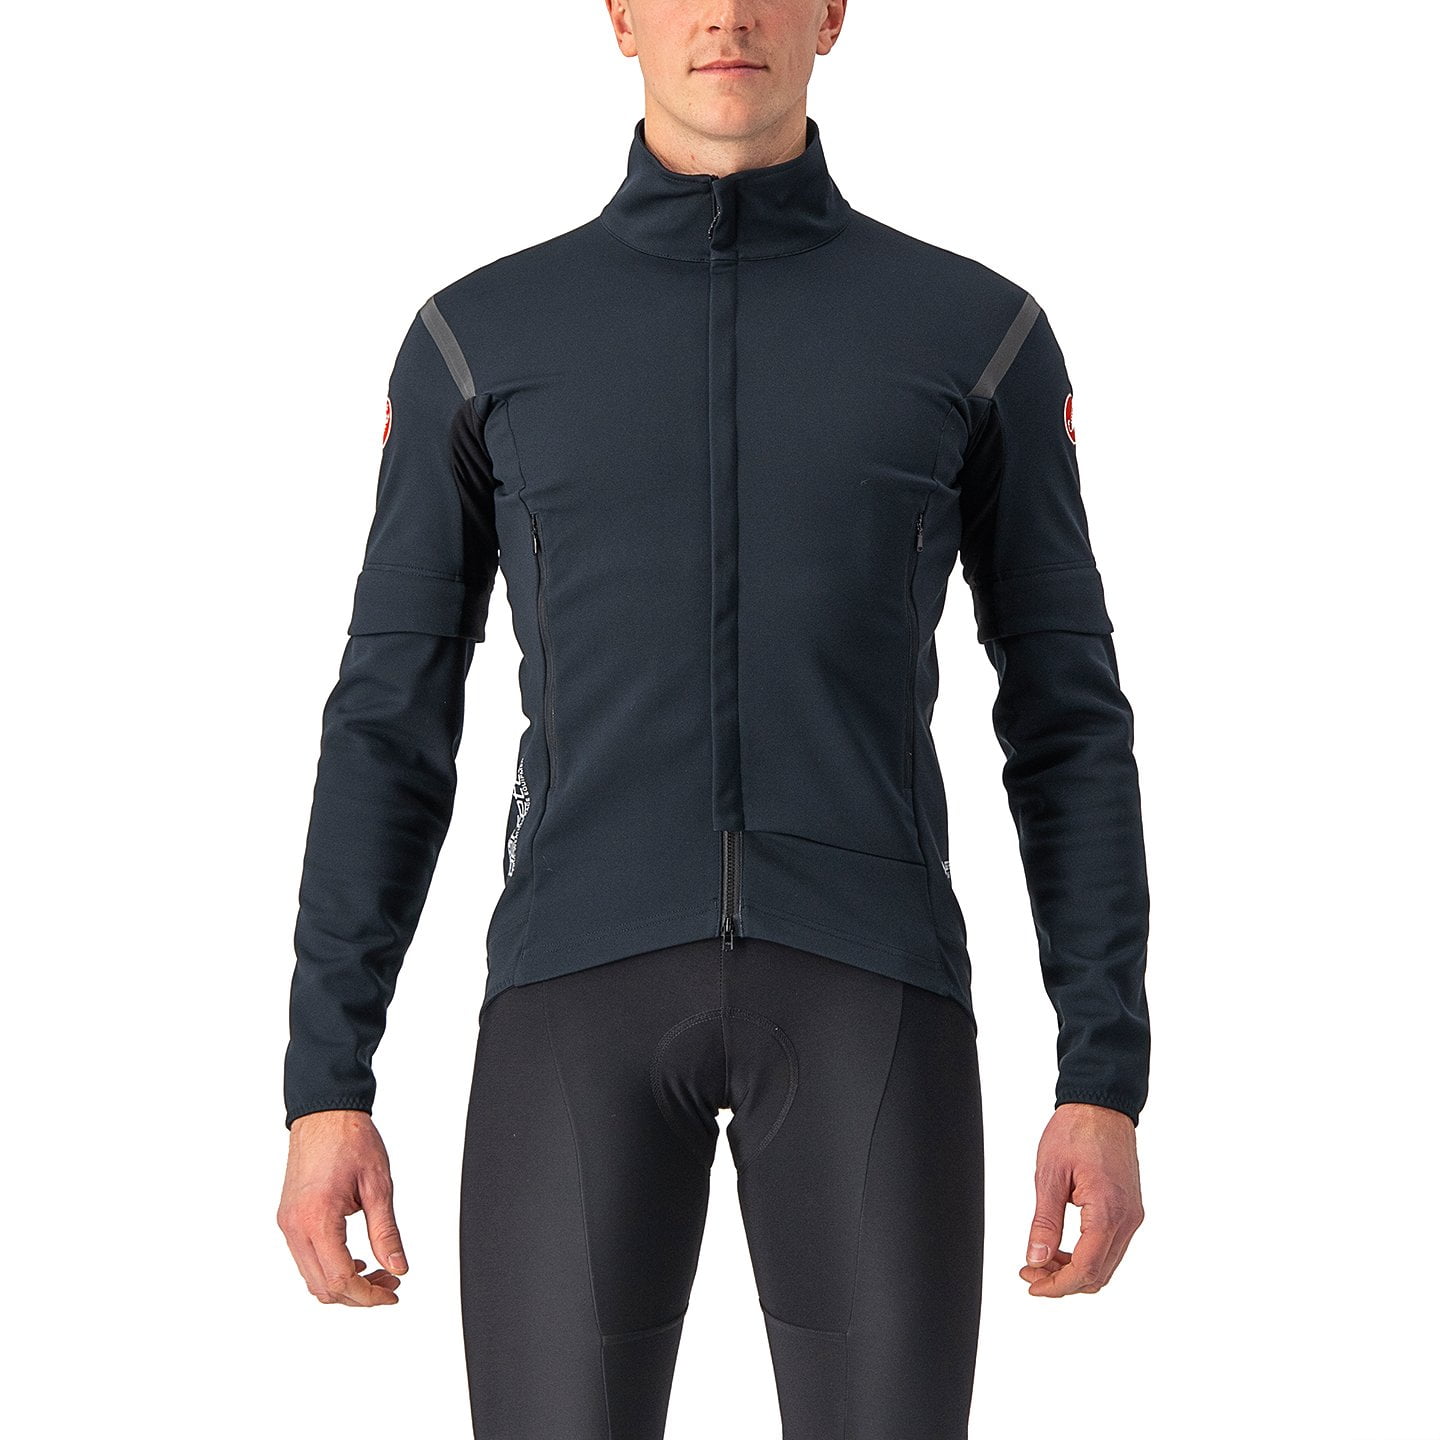 CASTELLI Perfetto RoS 2 Convertible Light Jacket Light Jacket, for men, size M, Bike jacket, Cycling clothing